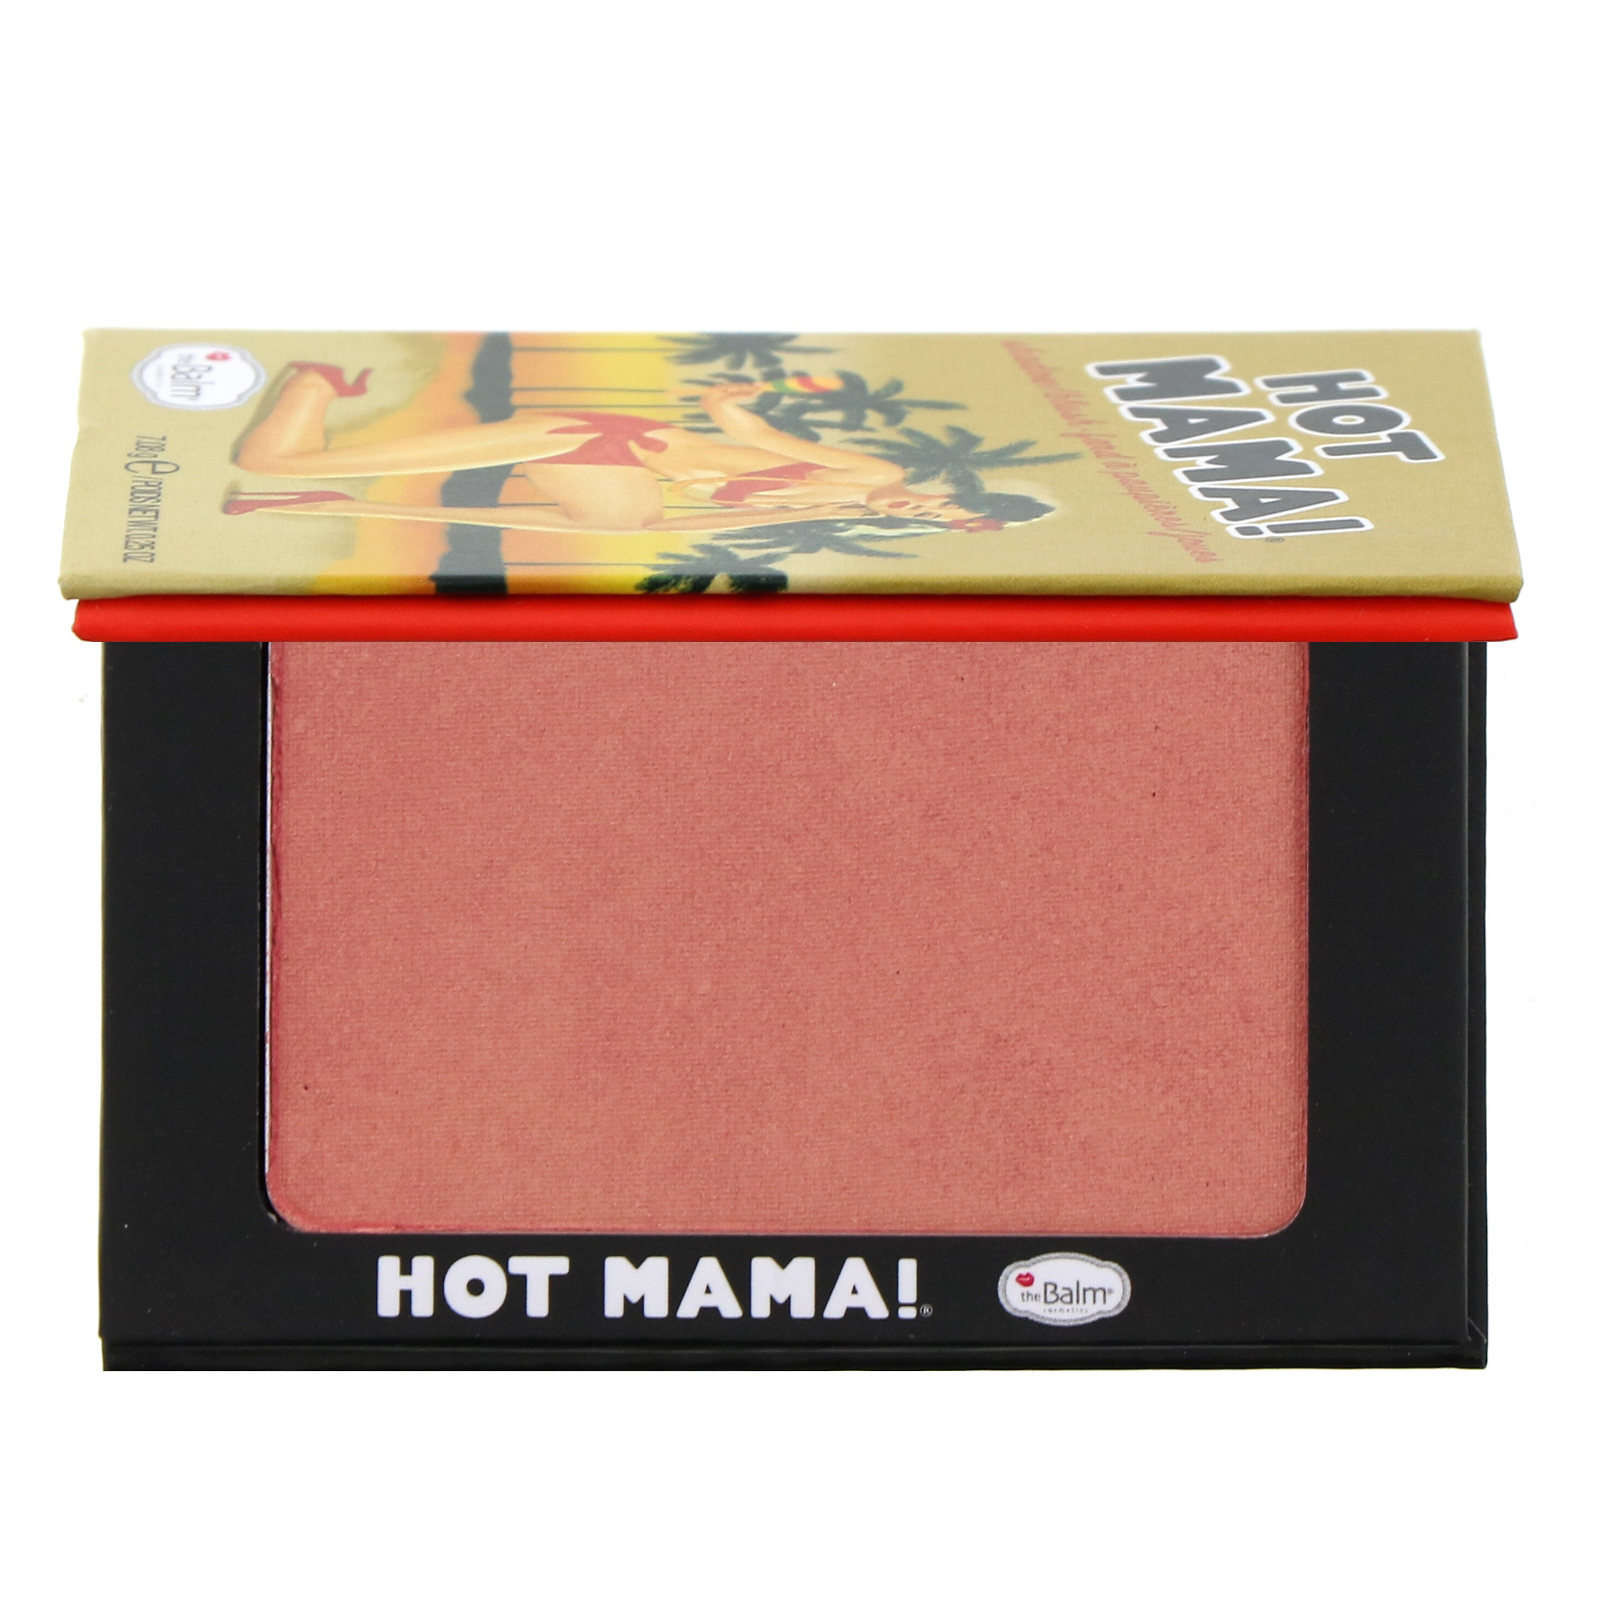 Blush the balm hot mama Thebalm Cosmetics Hot Mama Shadow Blush 0 25 Oz 7 08 G Iherb